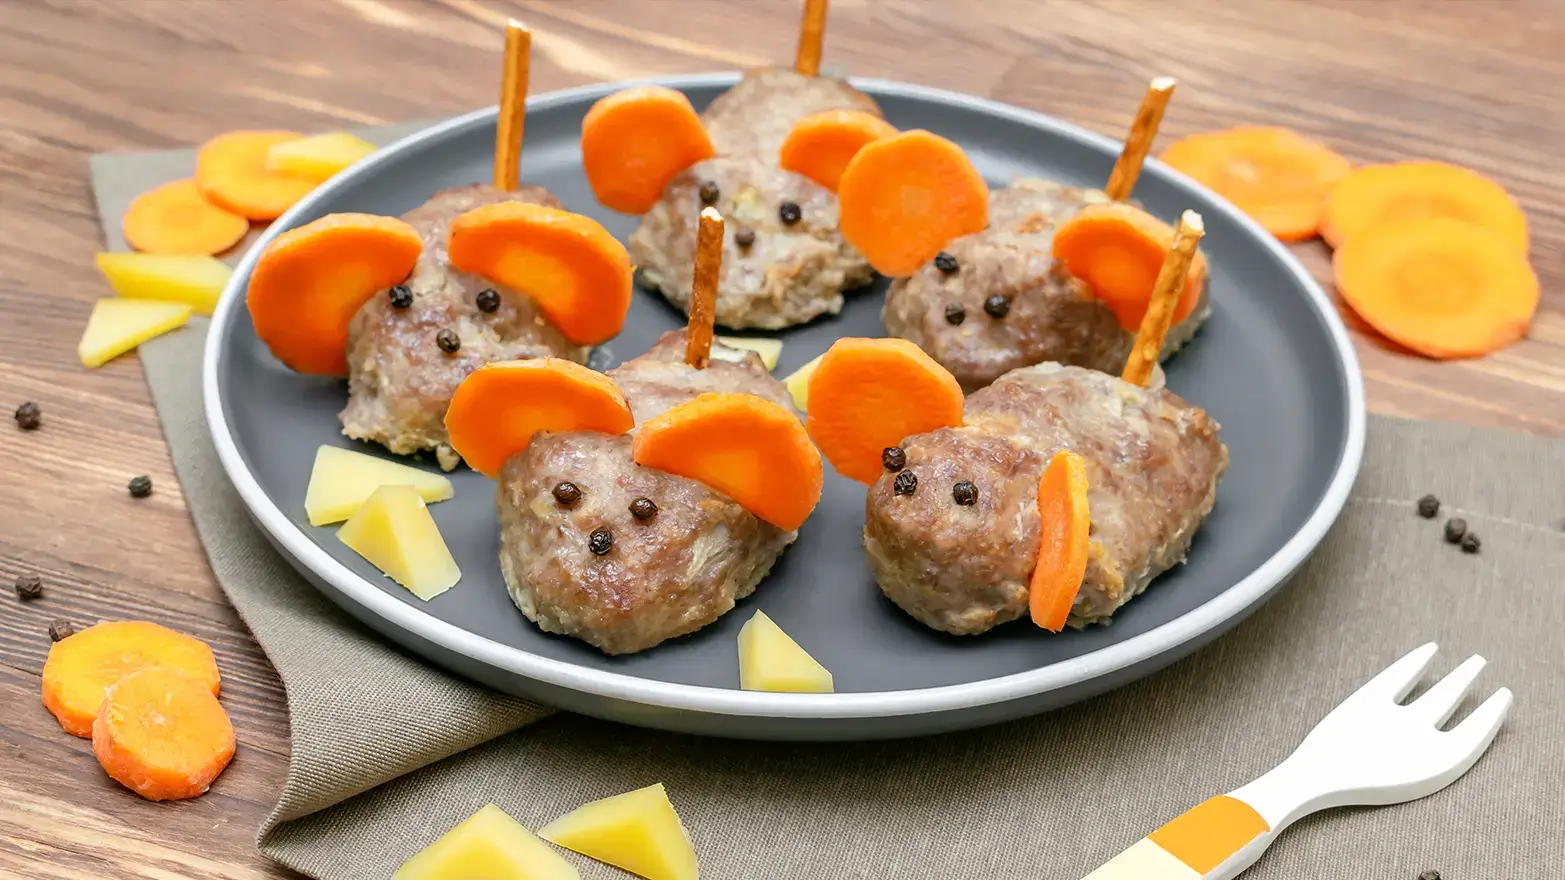 Mini meatloafs that look like rats. 